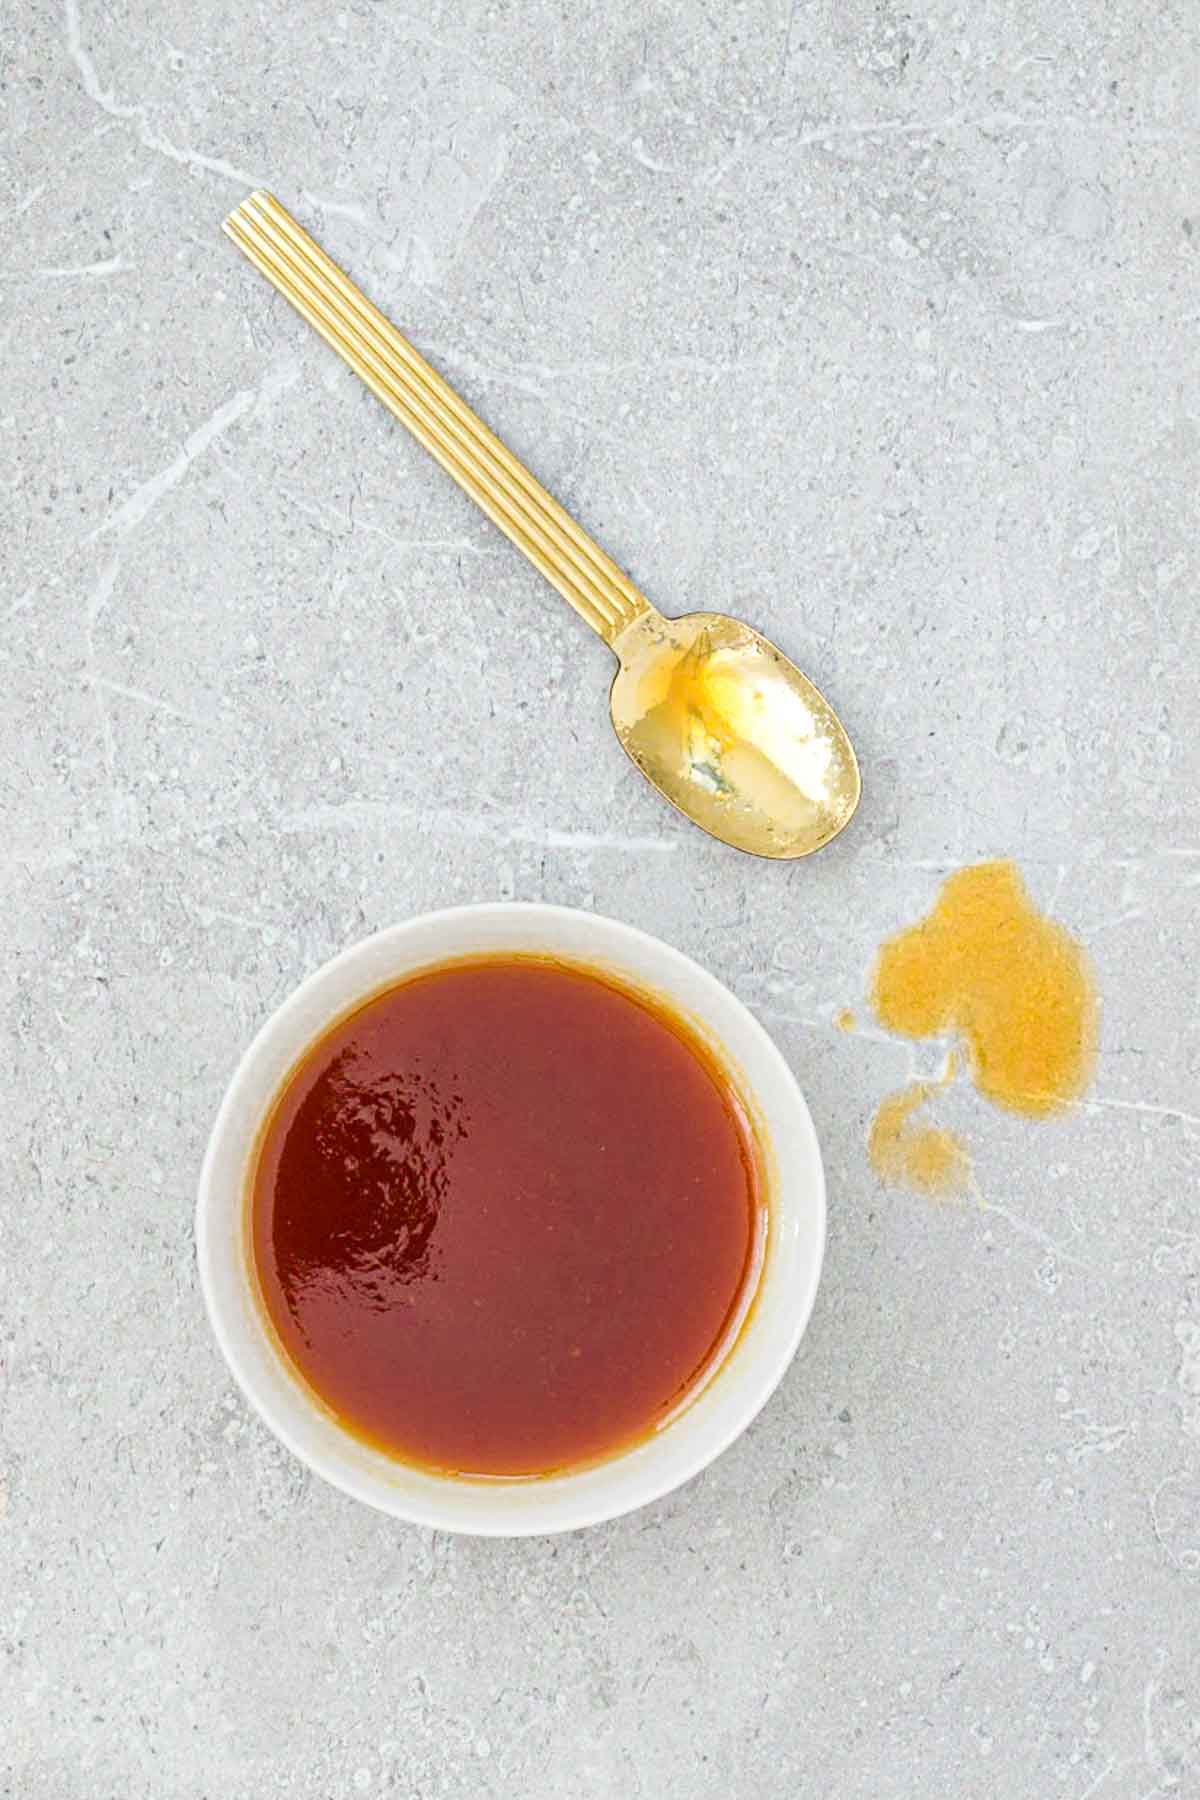 Blood orange syrup for orangeade